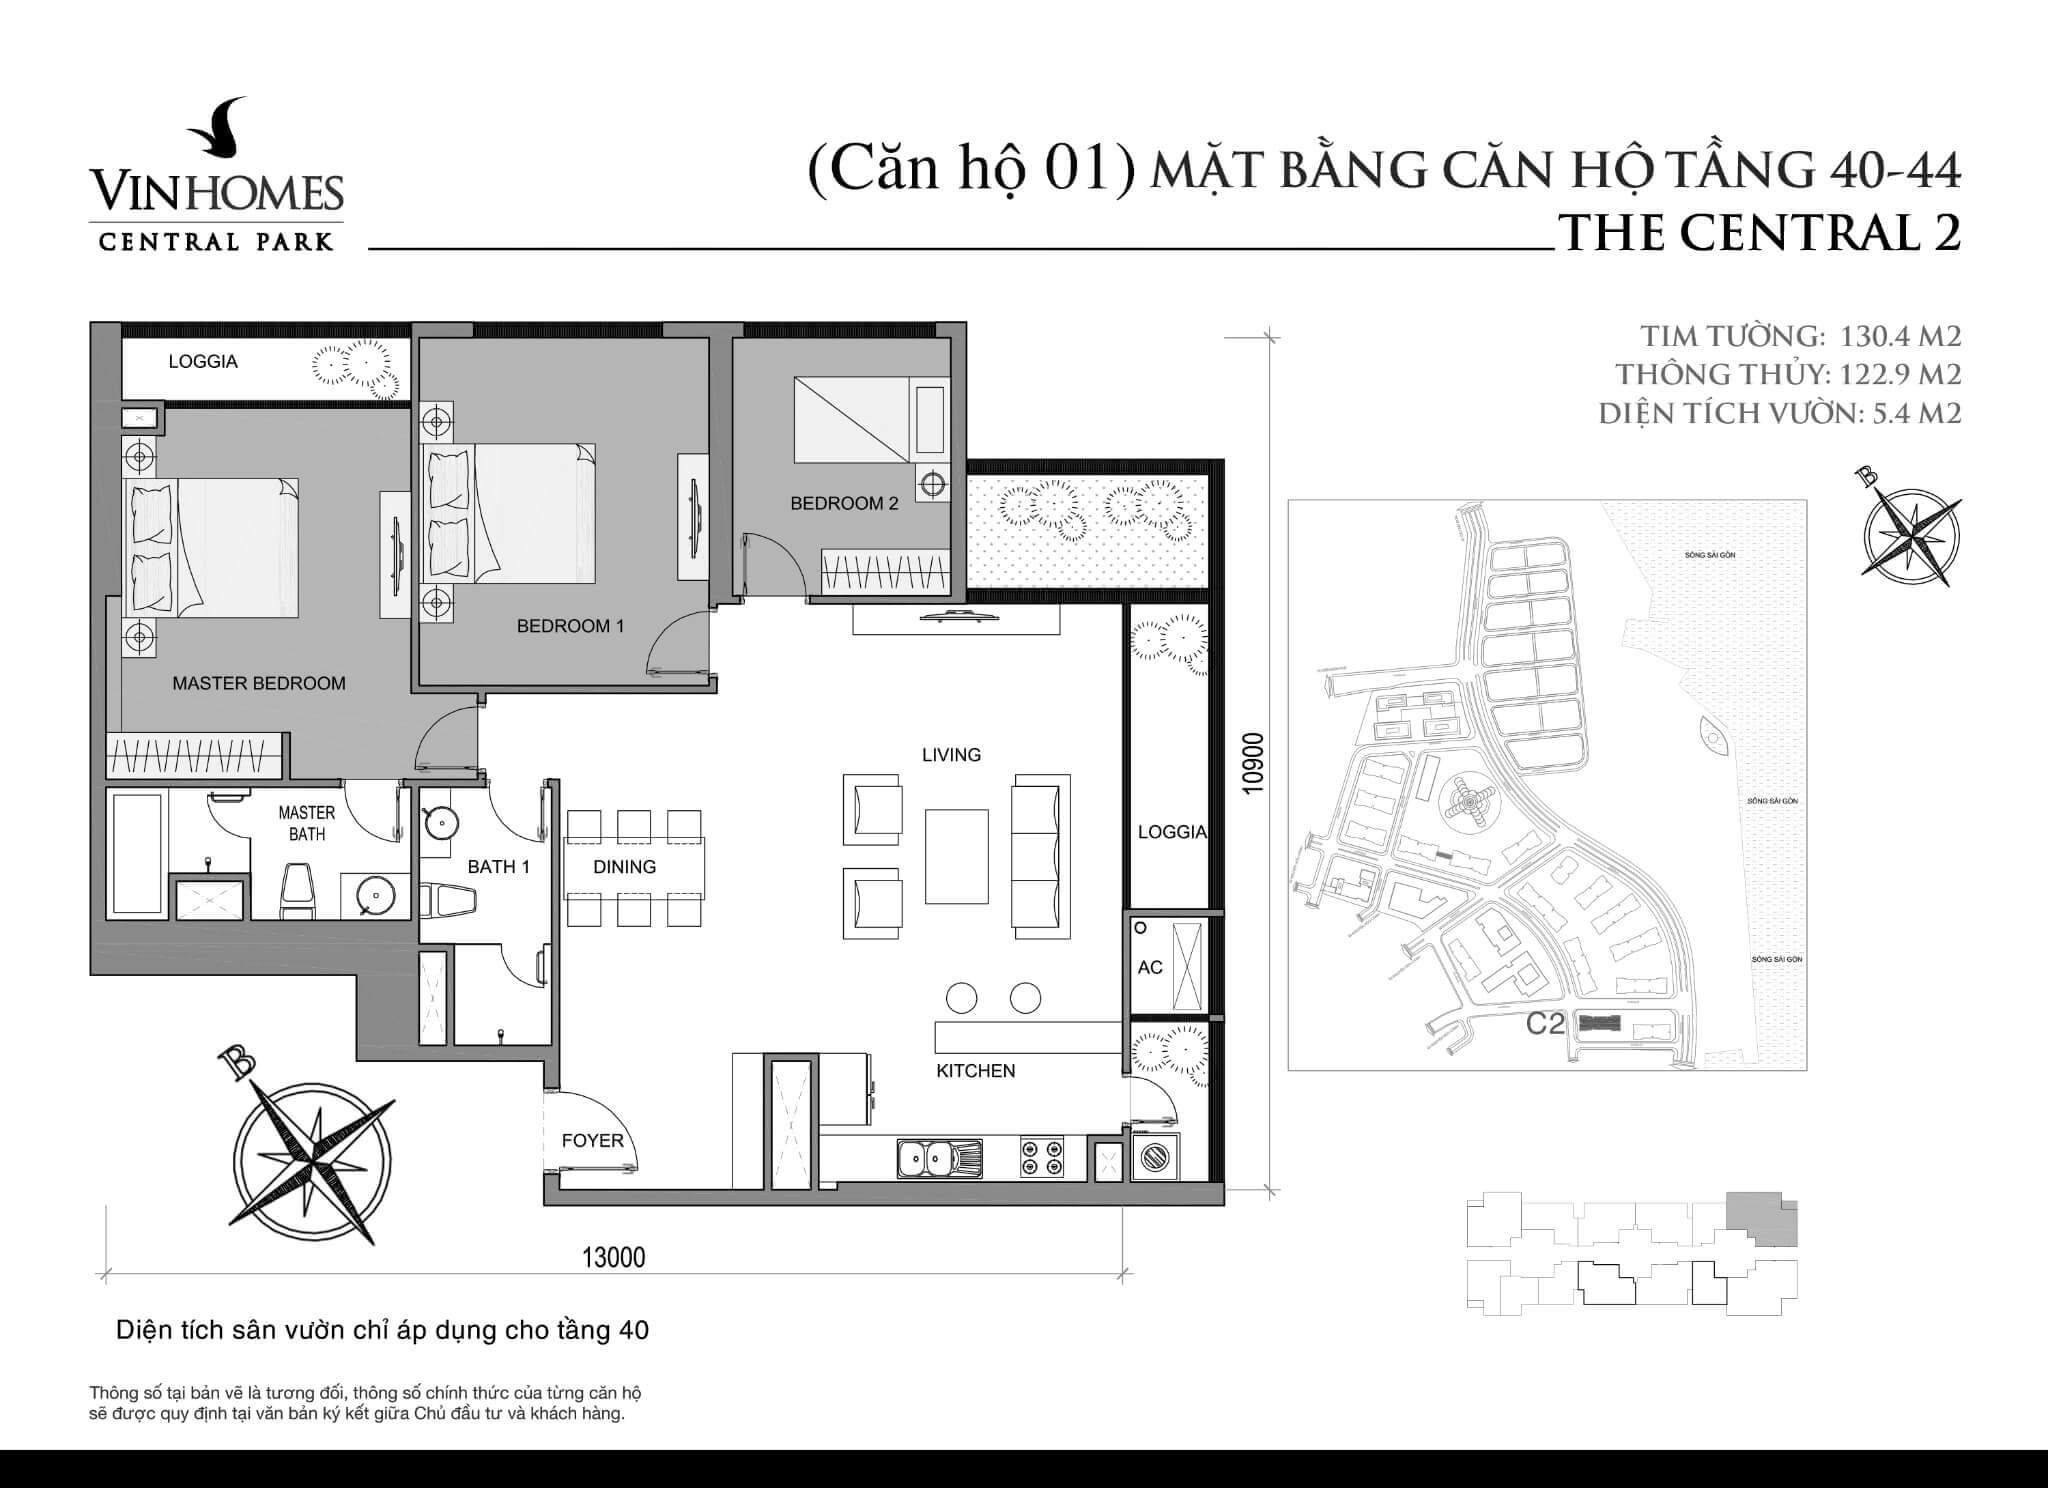 layout căn hộ số 1 C2-01 tầng 40-44 